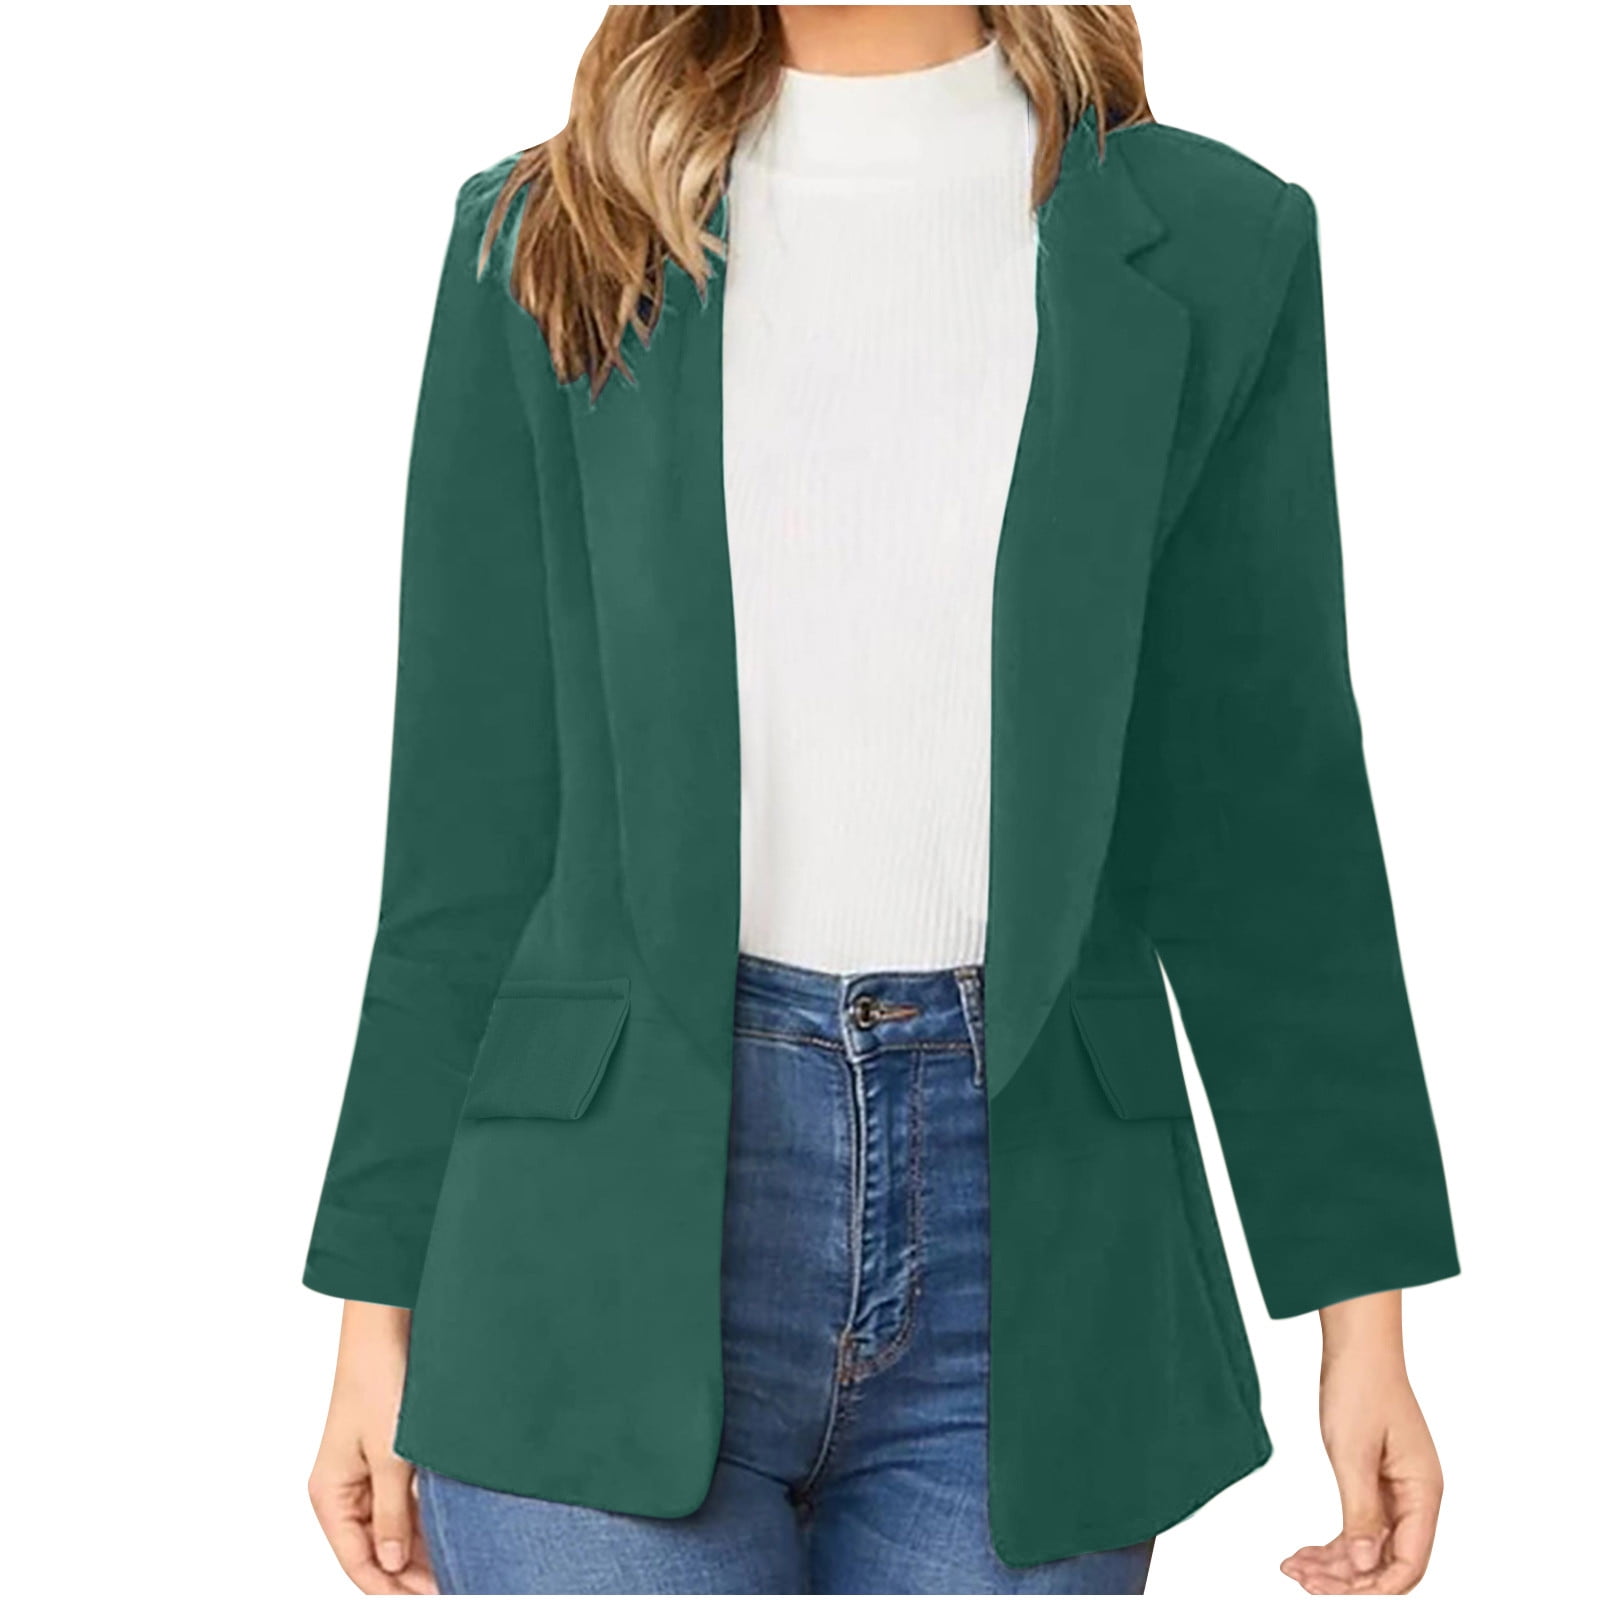 Olyvenn 2022 Women Business Attire Solid Color Long Sleeve Cardigan Women Tops  Plus Size Loose Casual Top Jacket Coat Green XL 